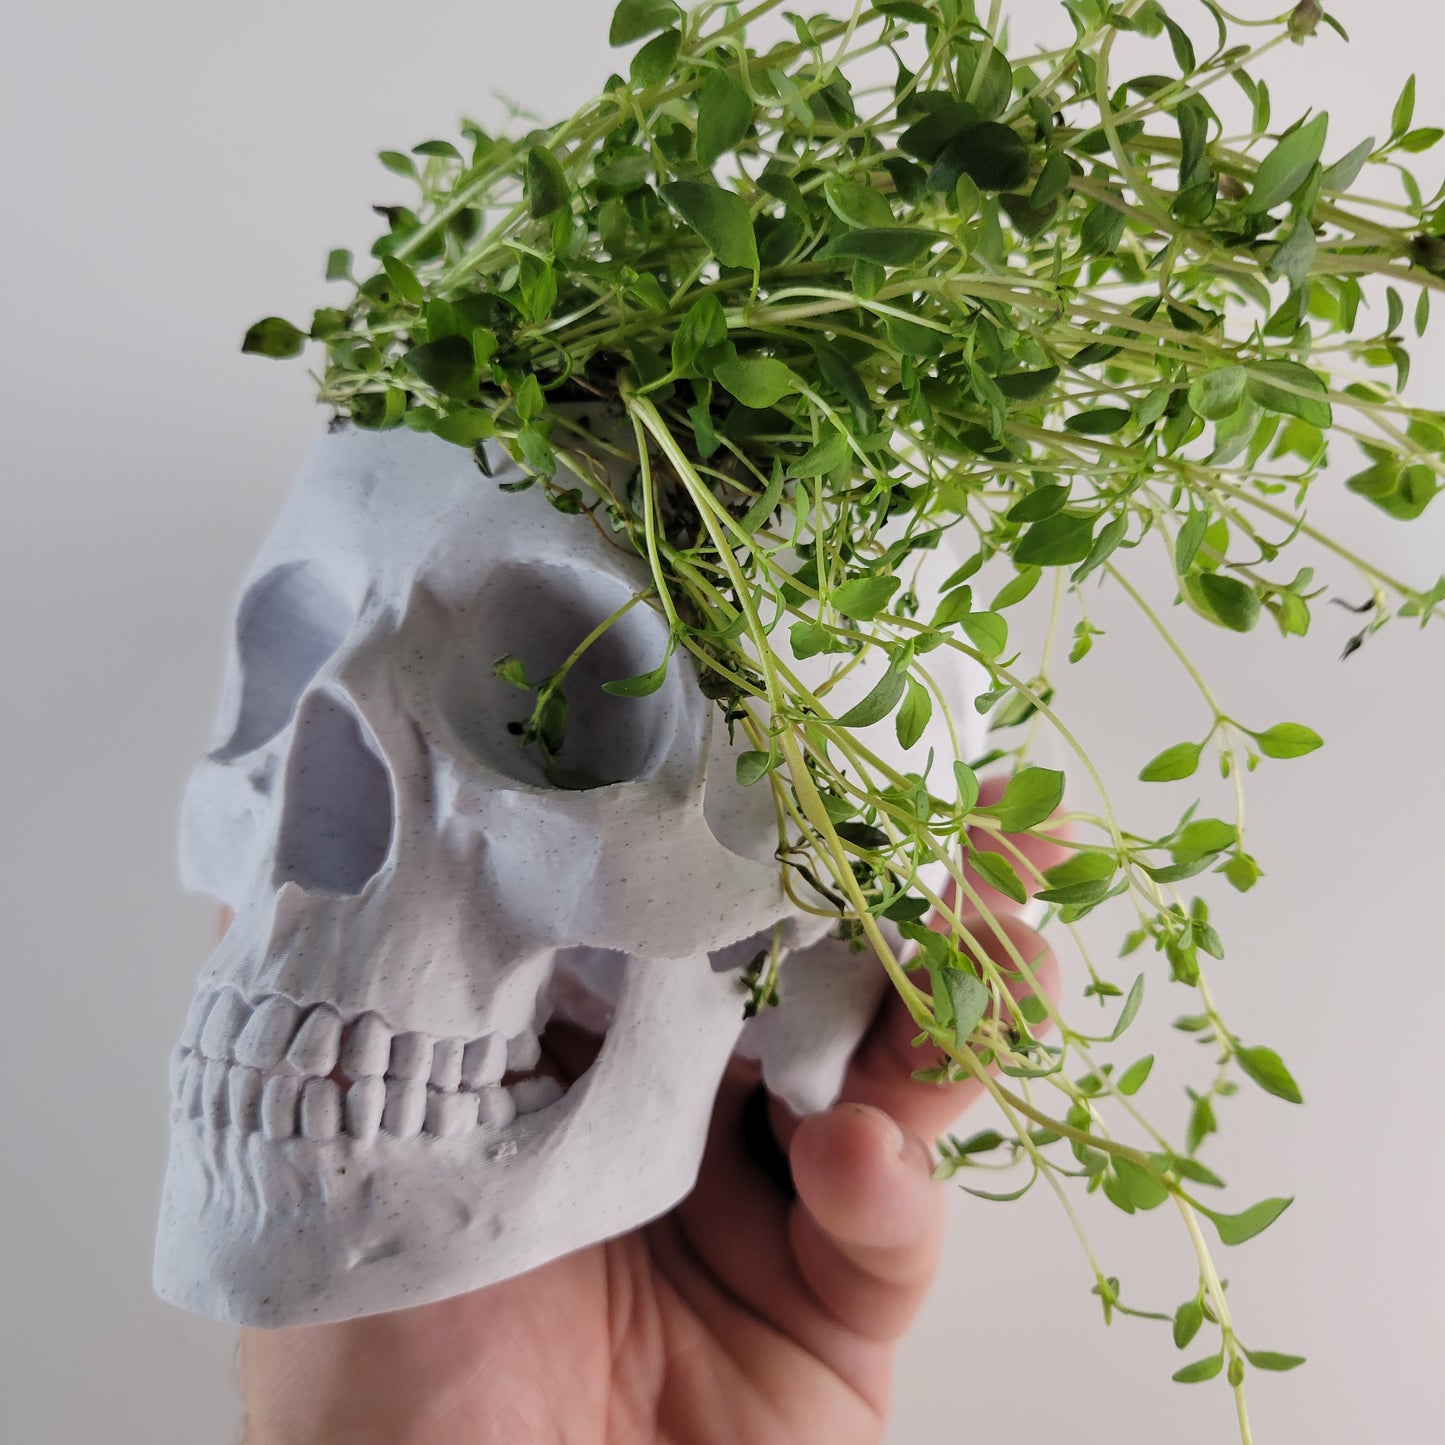 Skull Herb Planter, 3D Printed 3/4 sized skull replica.